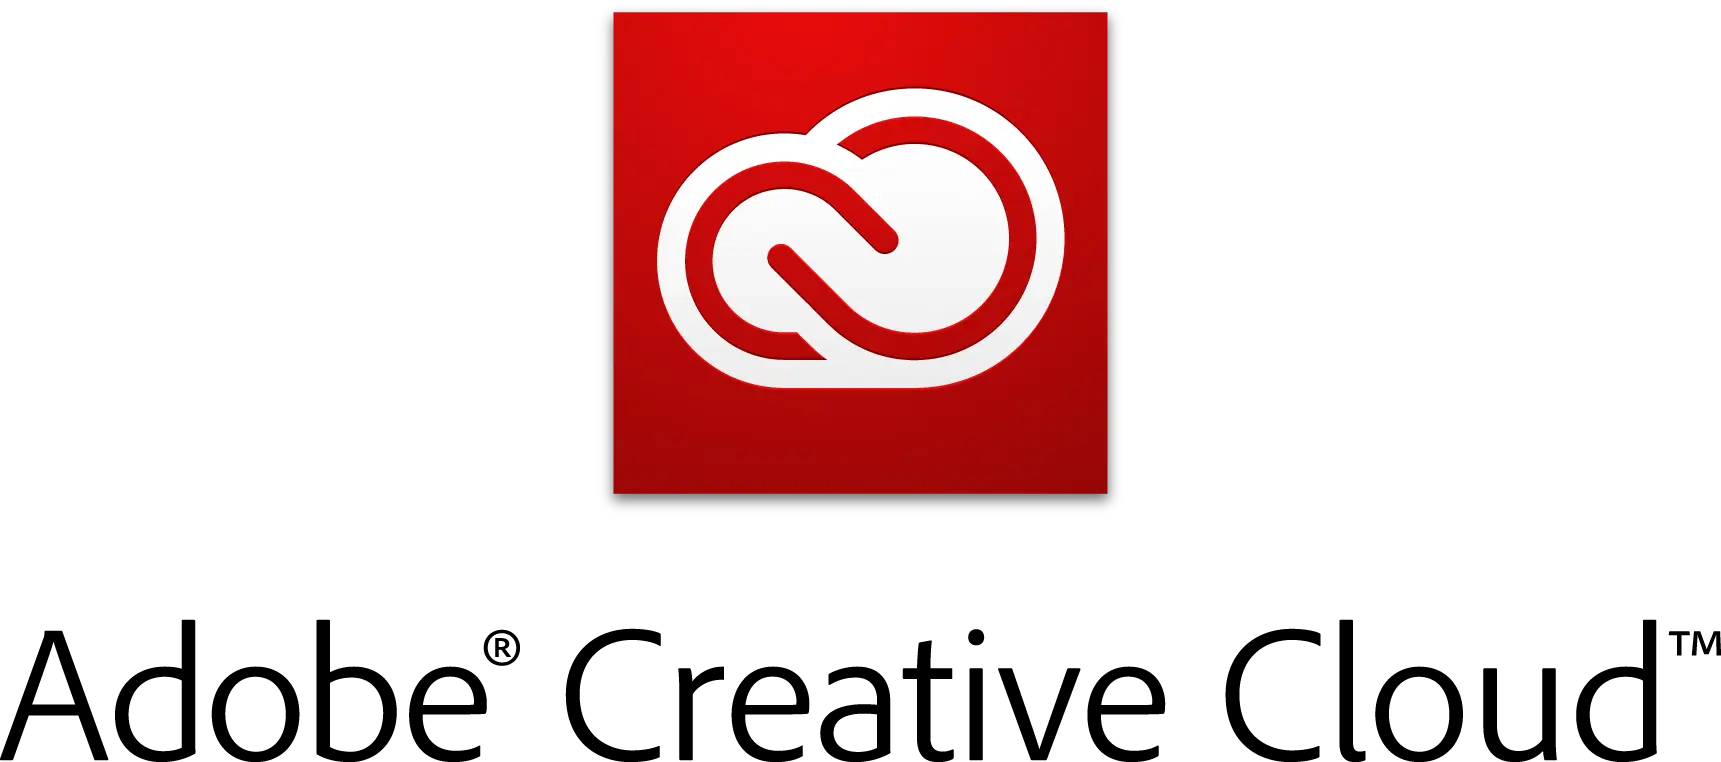 Adobe Creative Cloud Logo